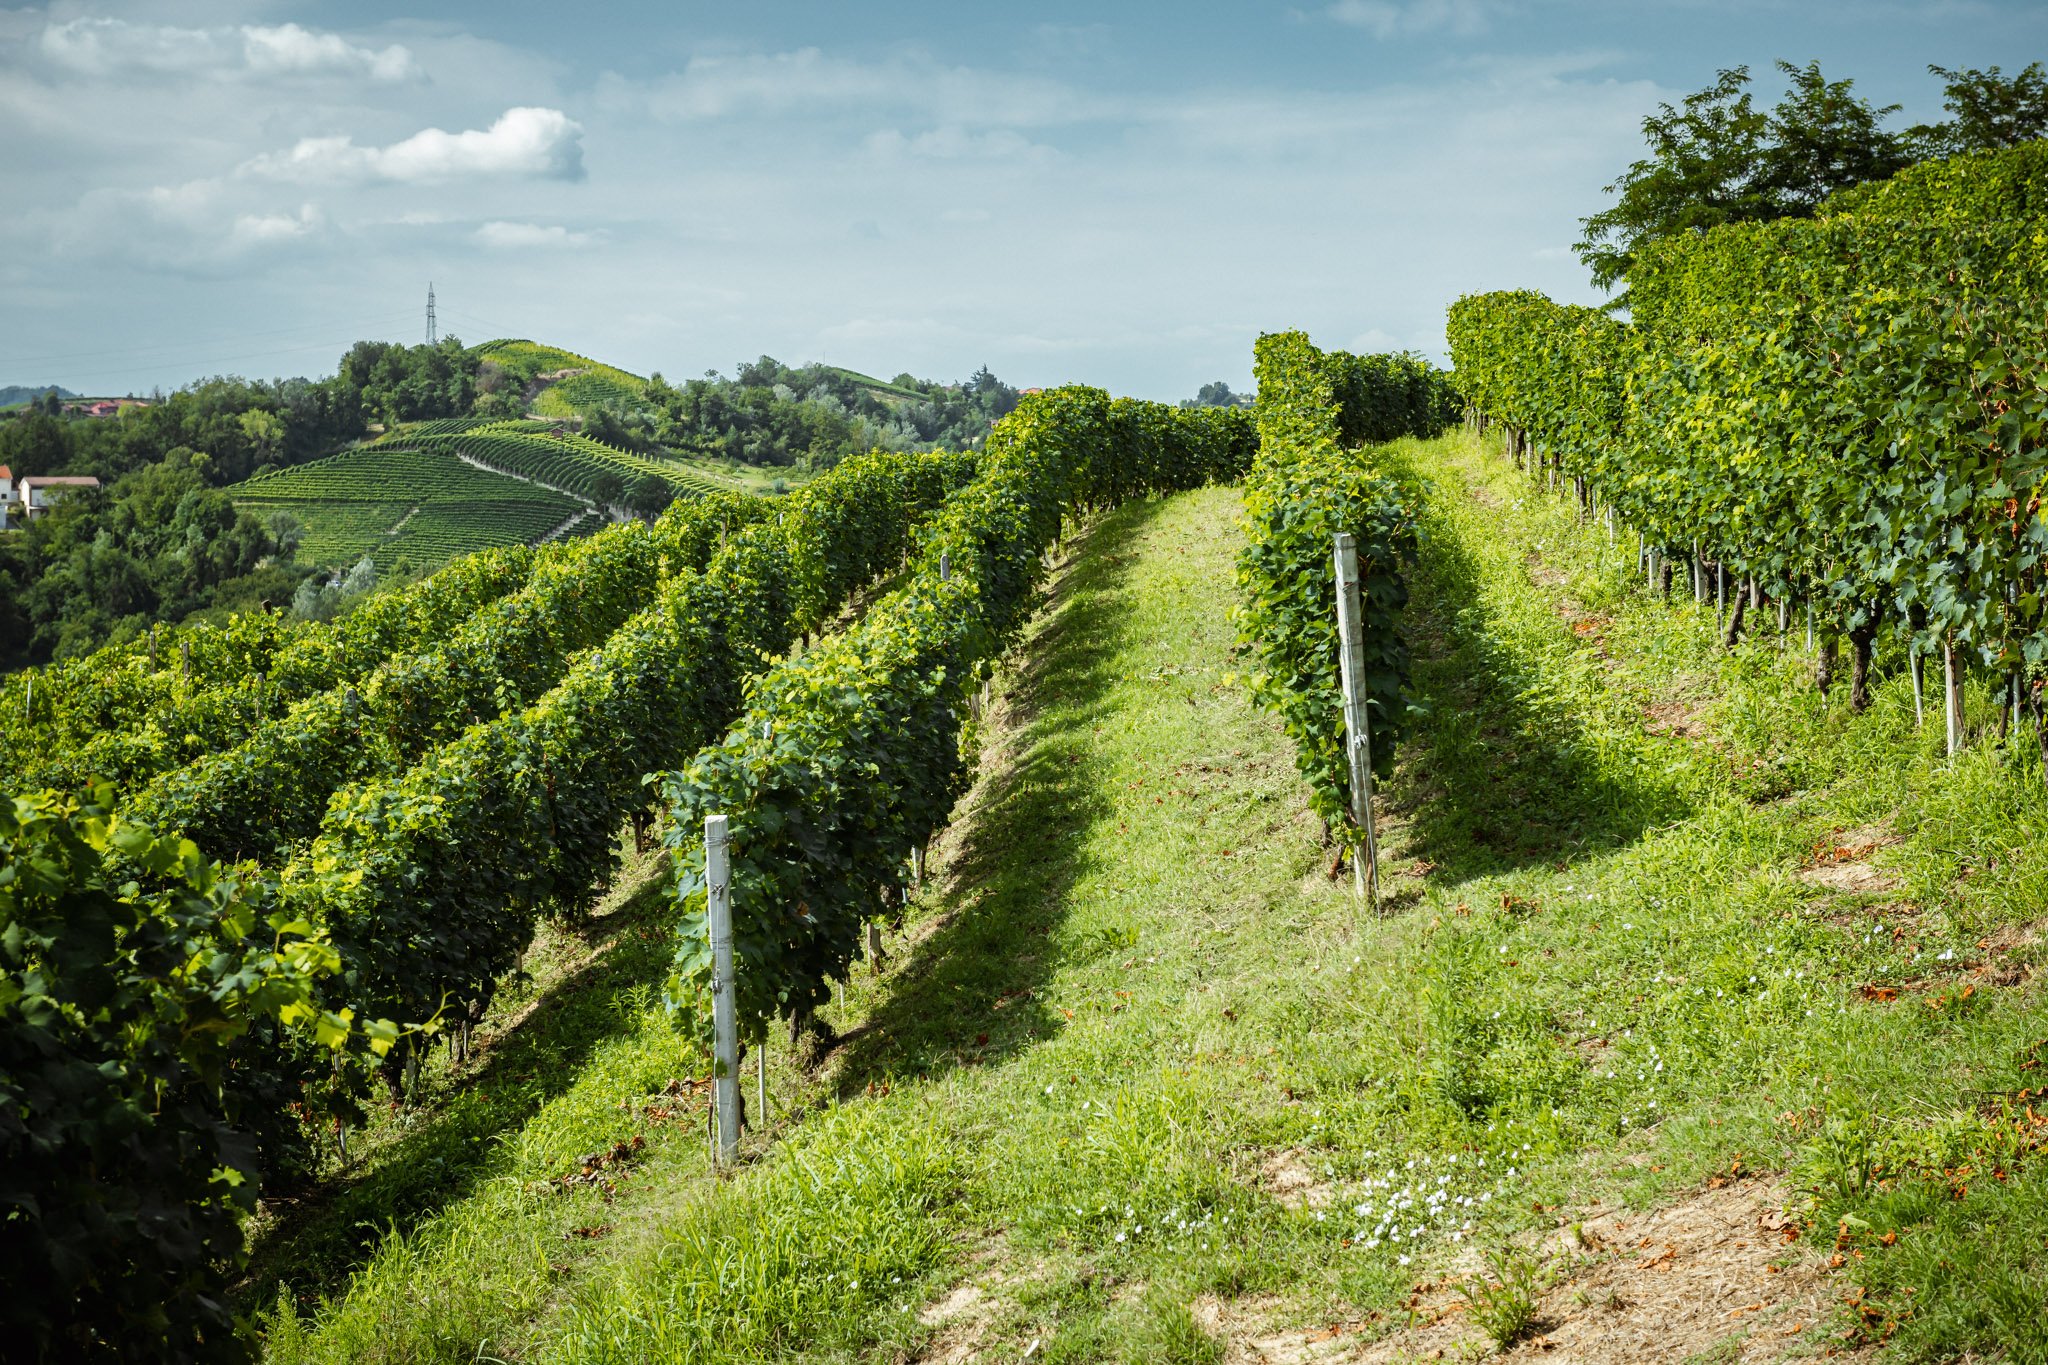 Vineyards with Stefano Almondo-181.jpg